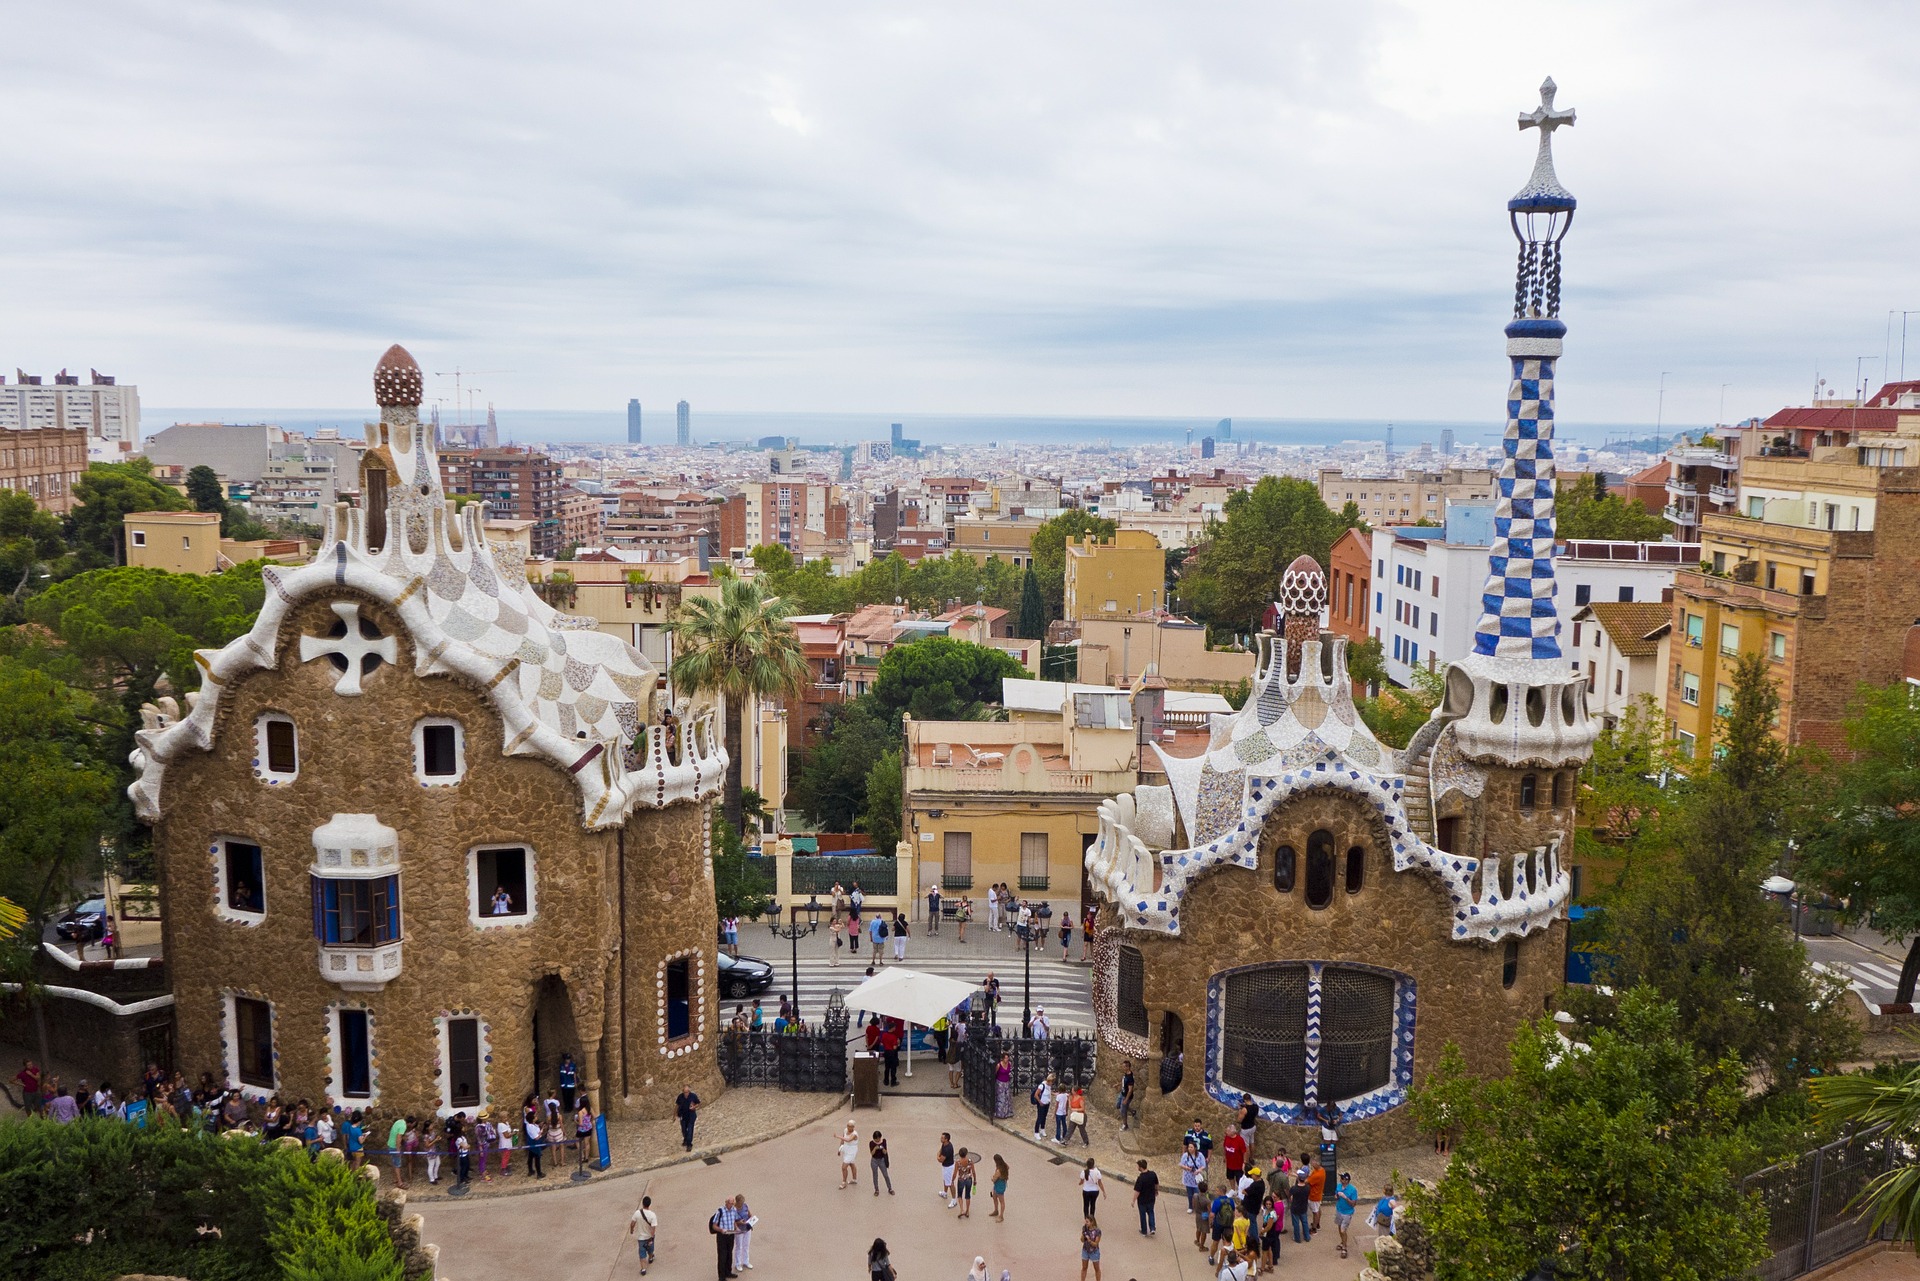 What is it like to visit the "Palau de la Música Catalana”?